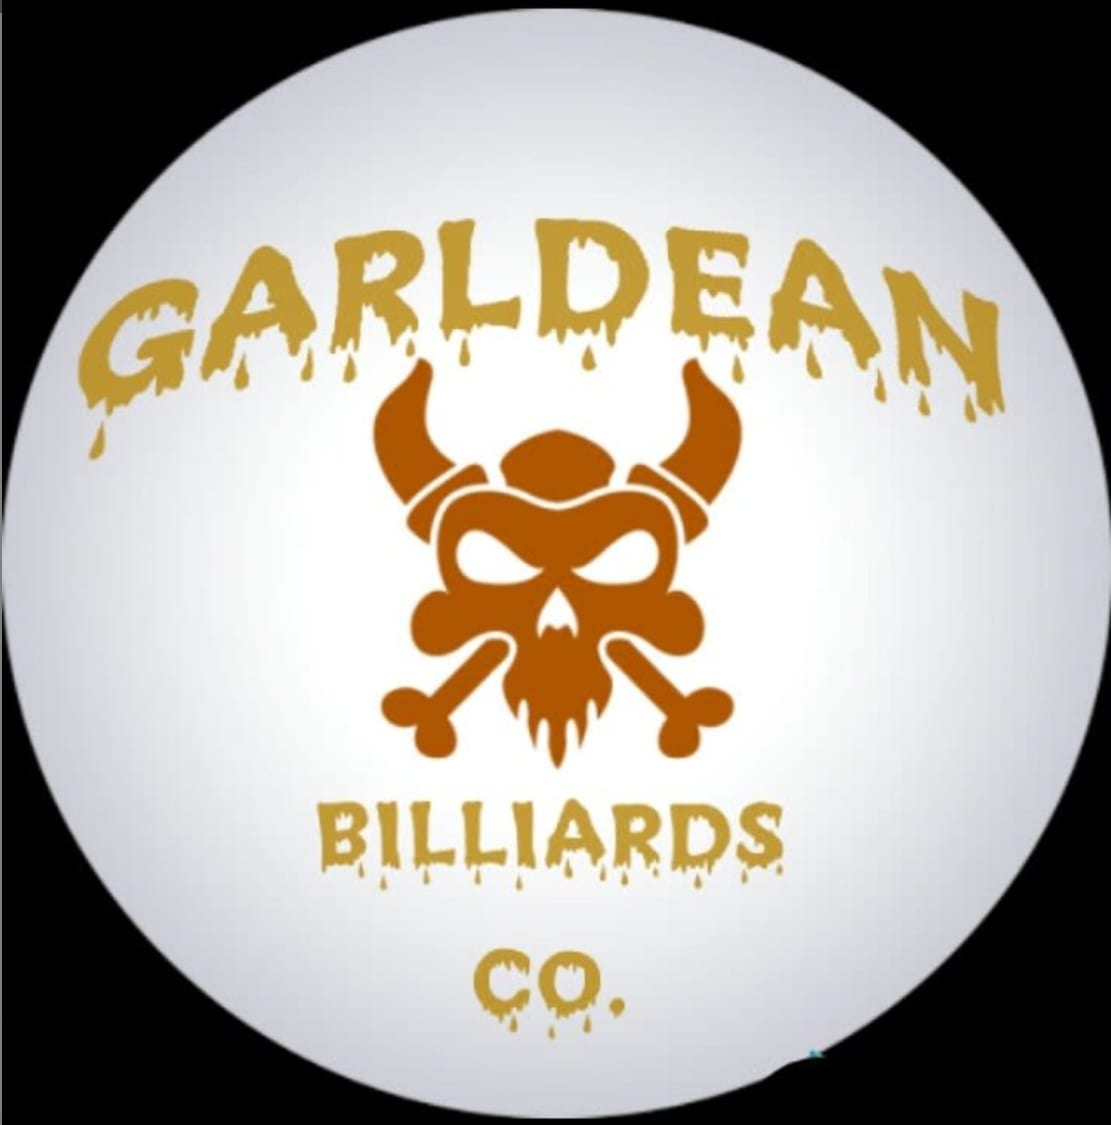 Garldean Custom Billiards